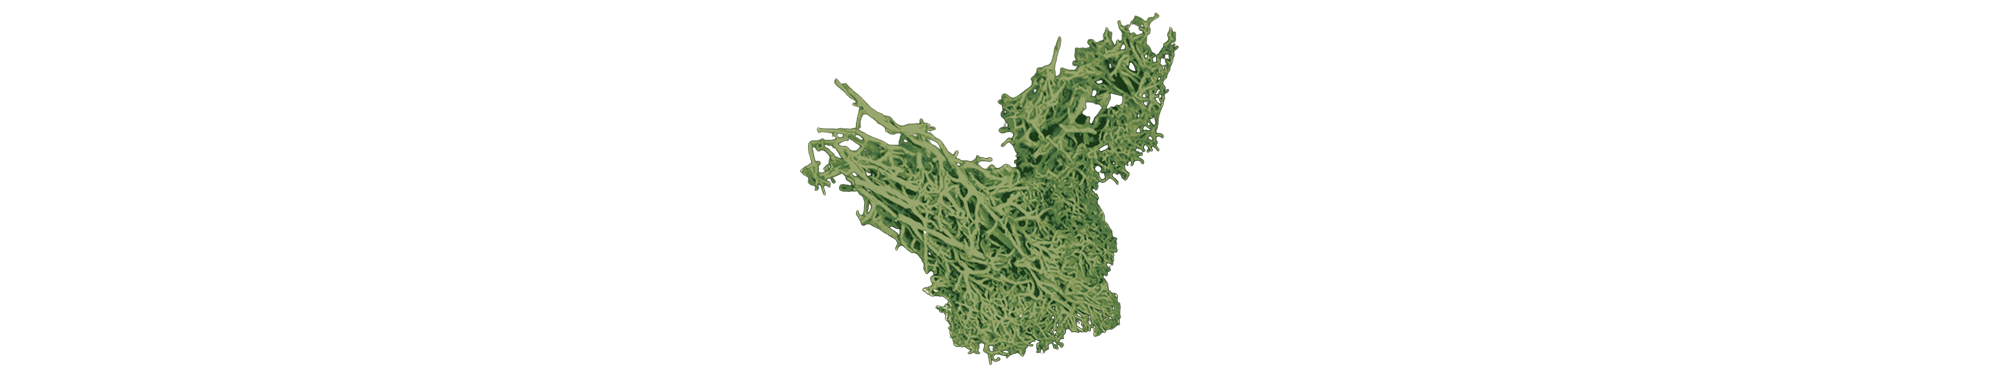 cutout of green sea moss